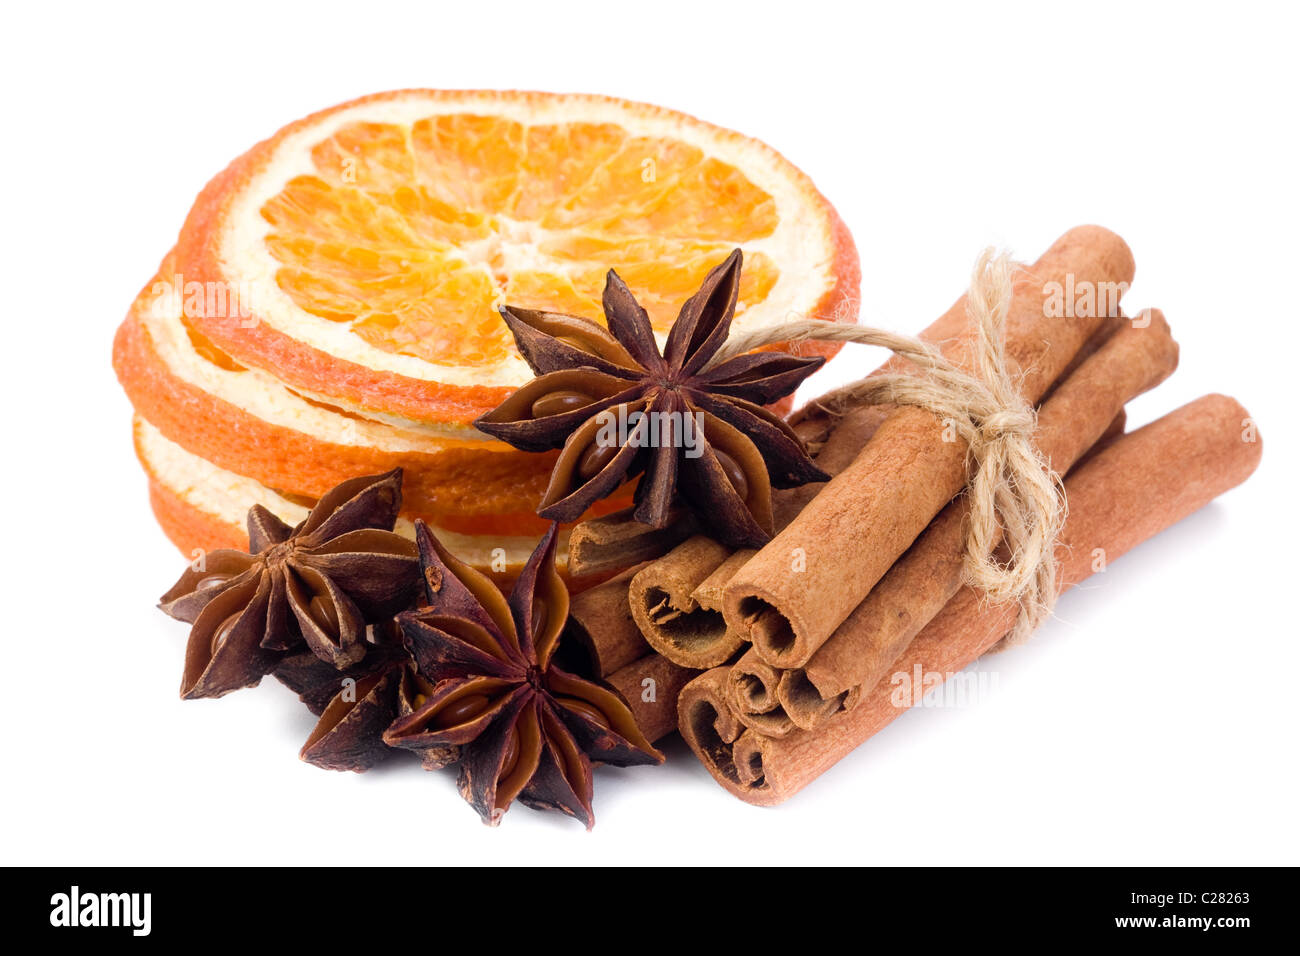 Sliced dried orange with cinnamon sticks and anise Stock Photo